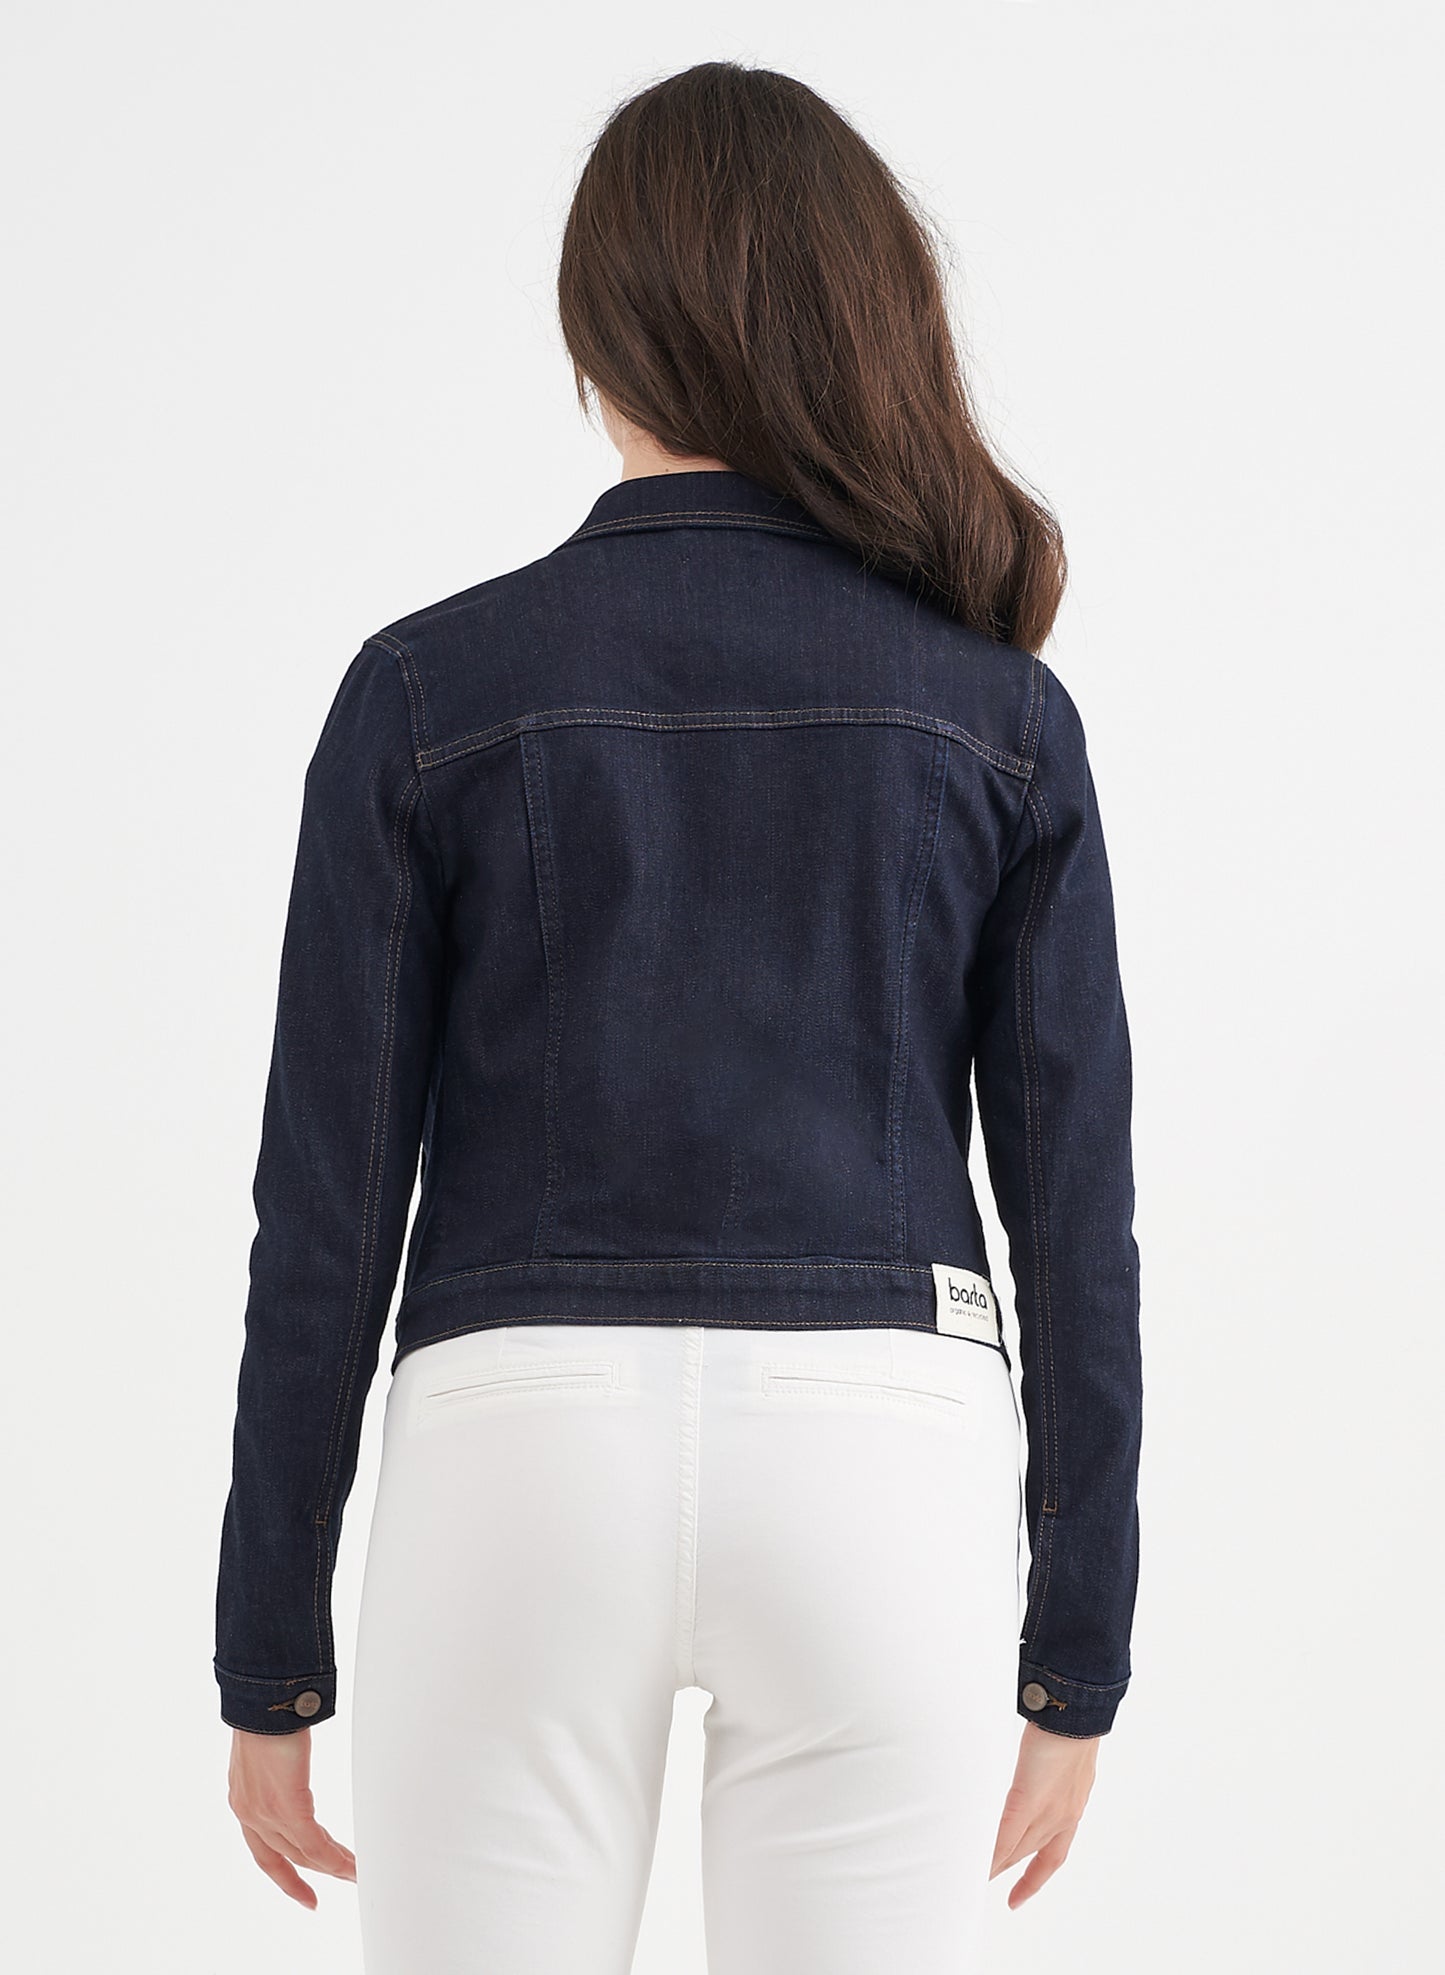 JENNA - Classic Denim Jeans Jacket - Dark Blue